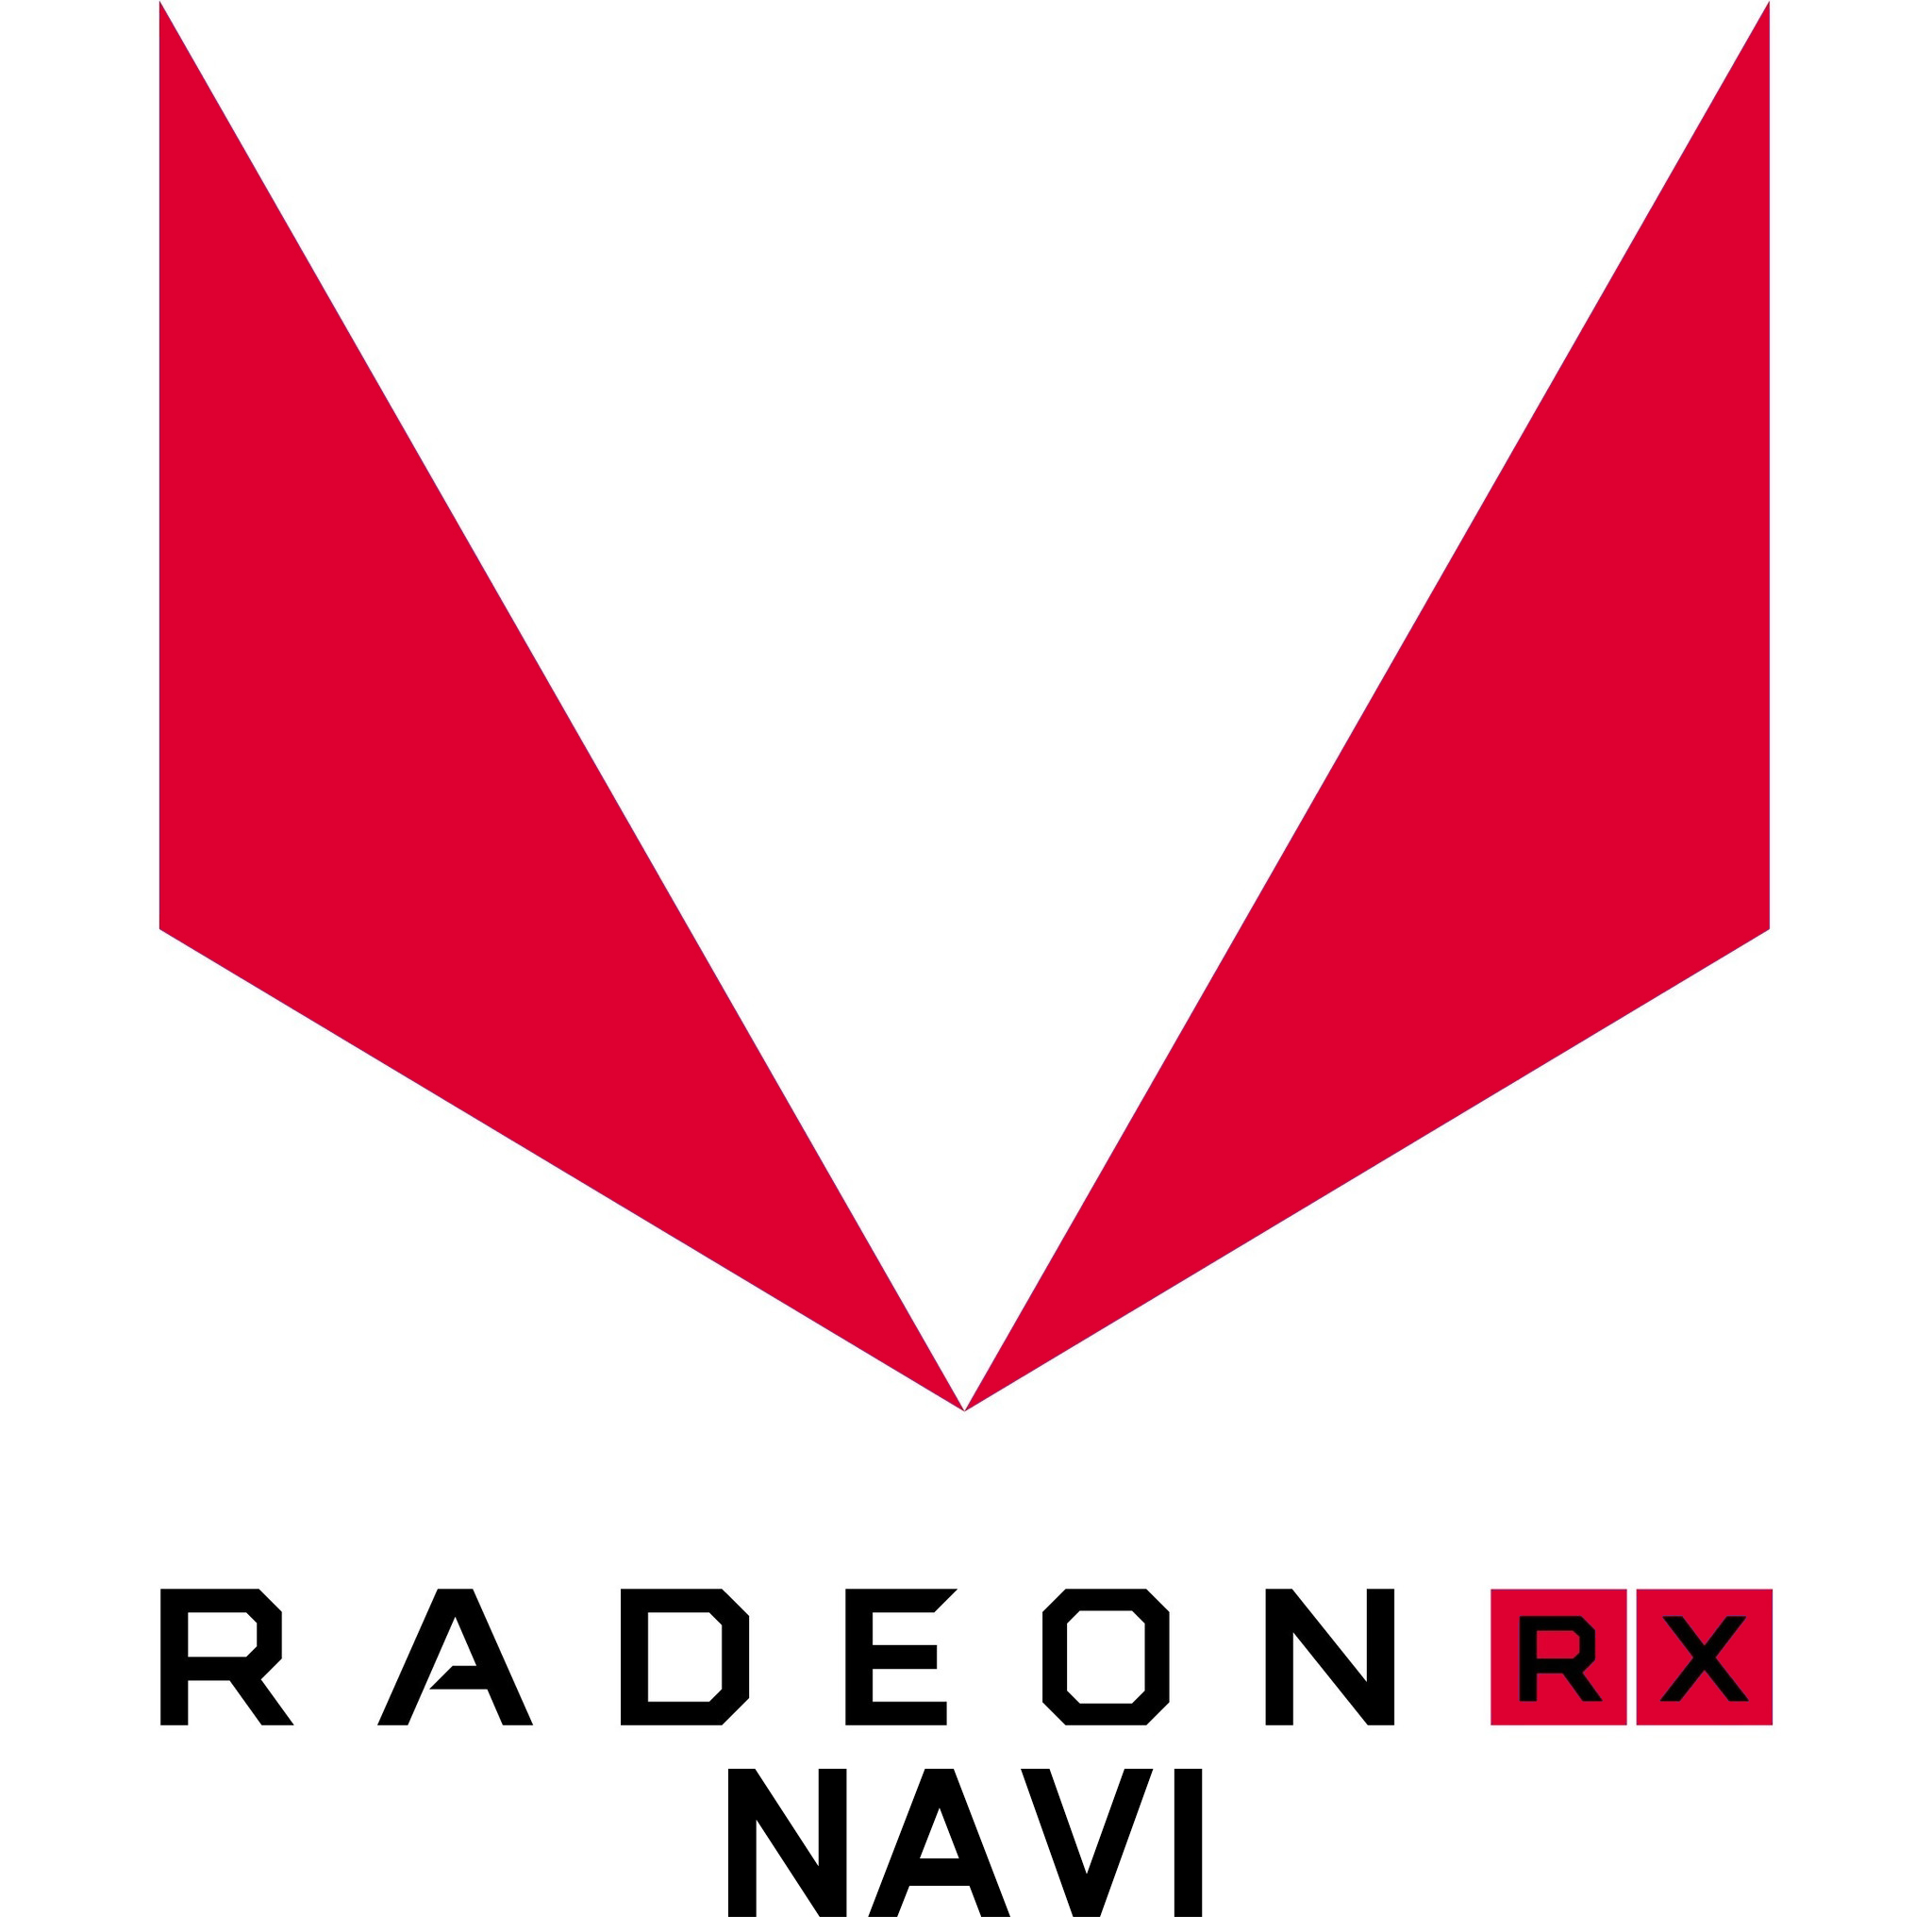 navi1 พบรหัสข้อมูลการ์ดจอ AMD Radeon 6000 ที่คาดว่าเป็นรหัส Navi 16, Navi 12, Navi 10, Navi 9 ปรากฏใน MacOS  